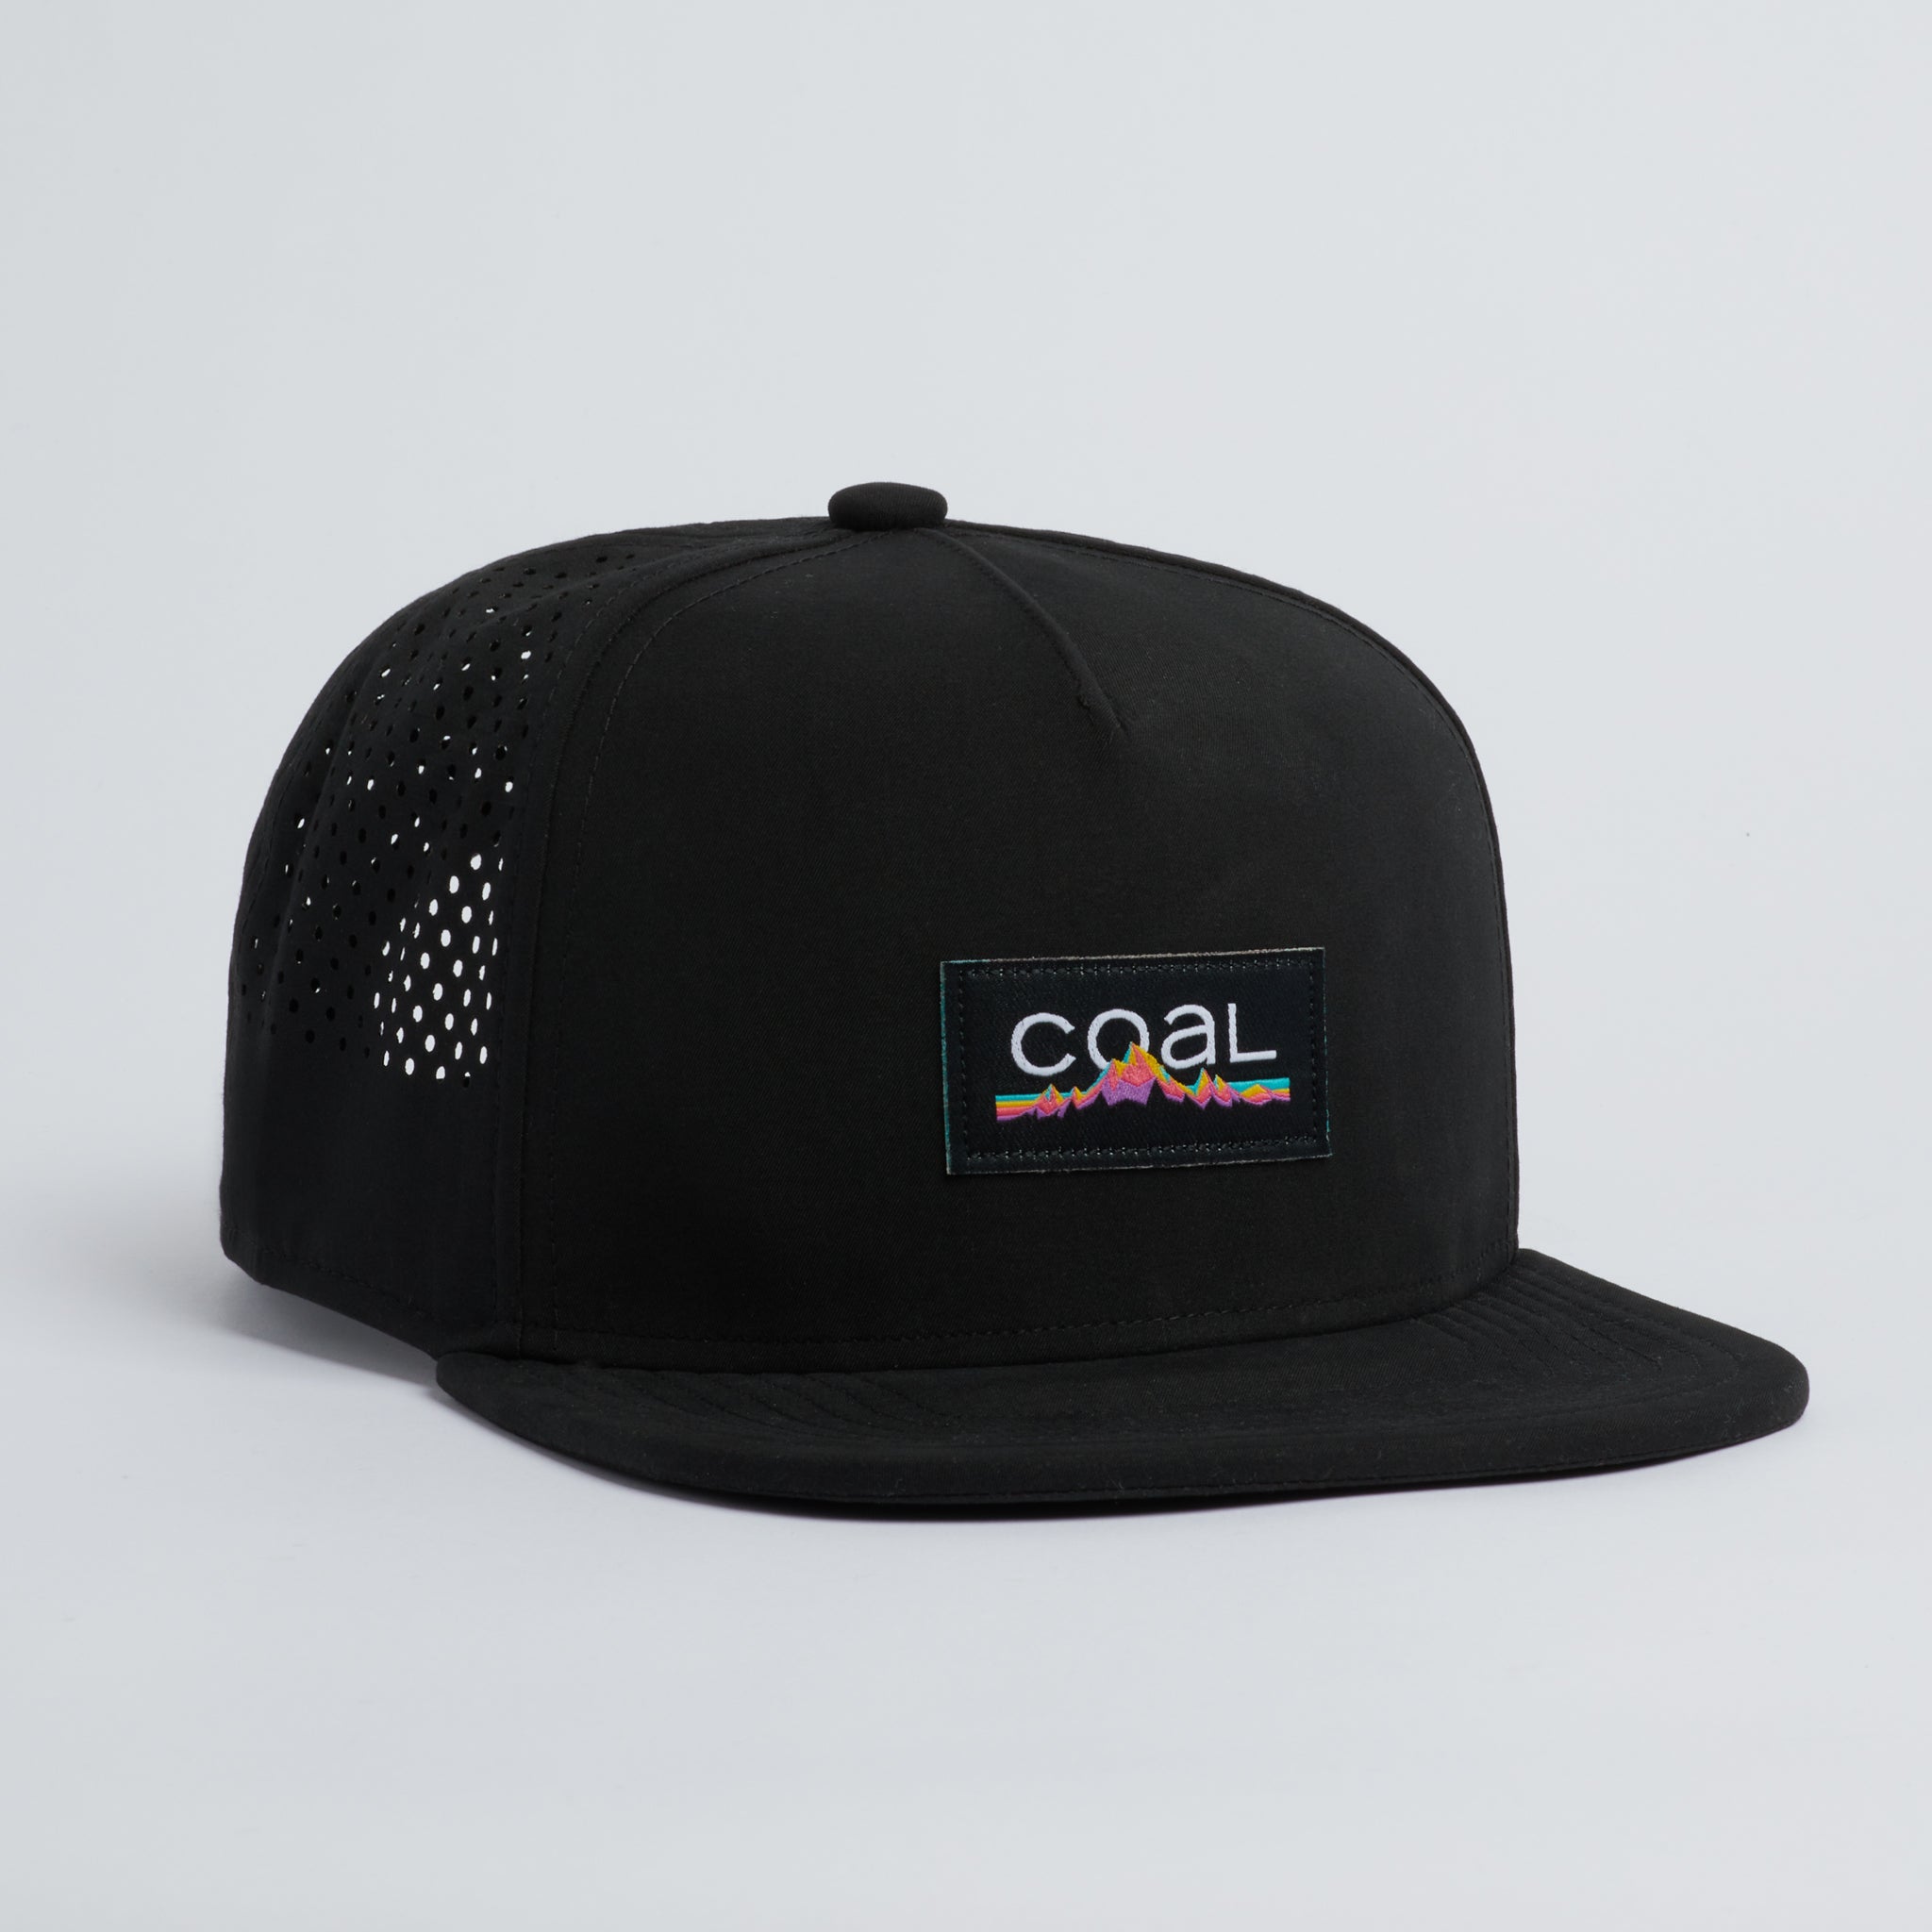 Coal Robertson Athletic Trucker Cap